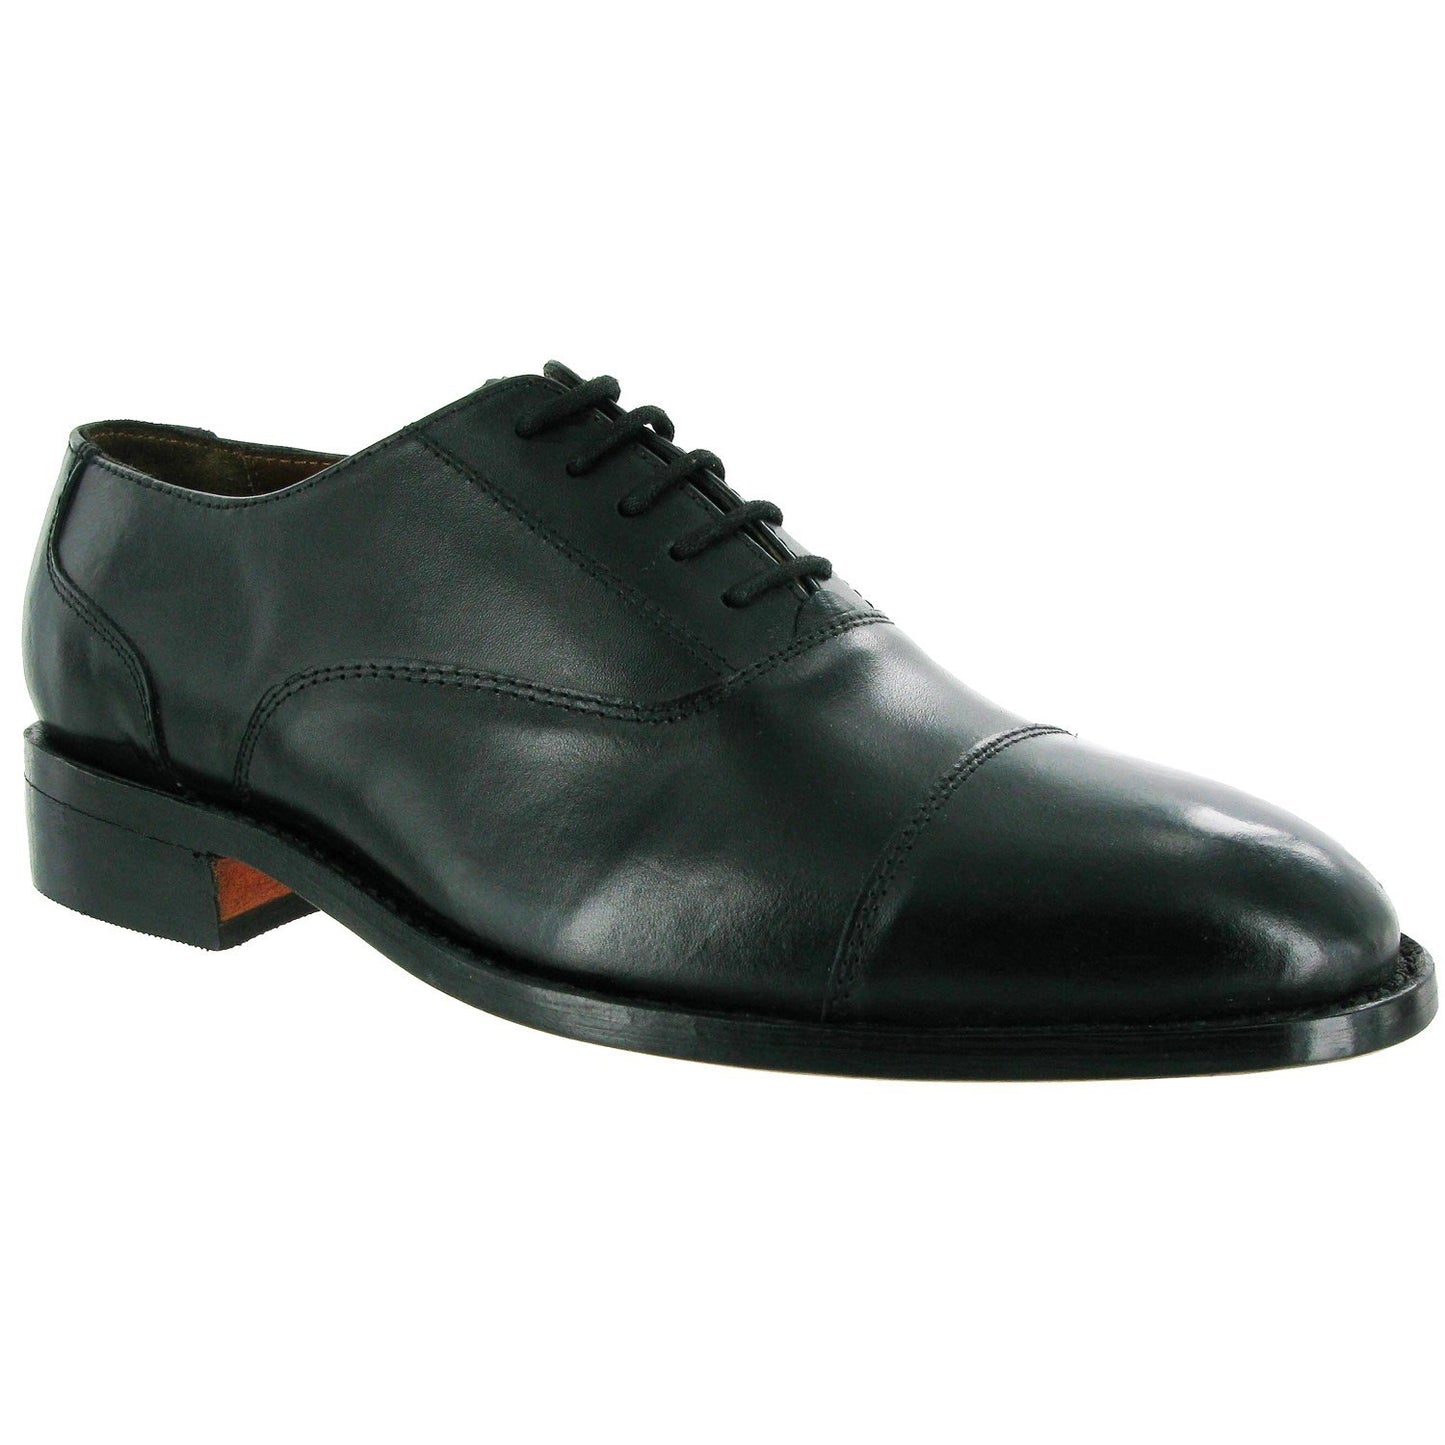 James Leather Soled Oxford Dress Shoe, Amblers